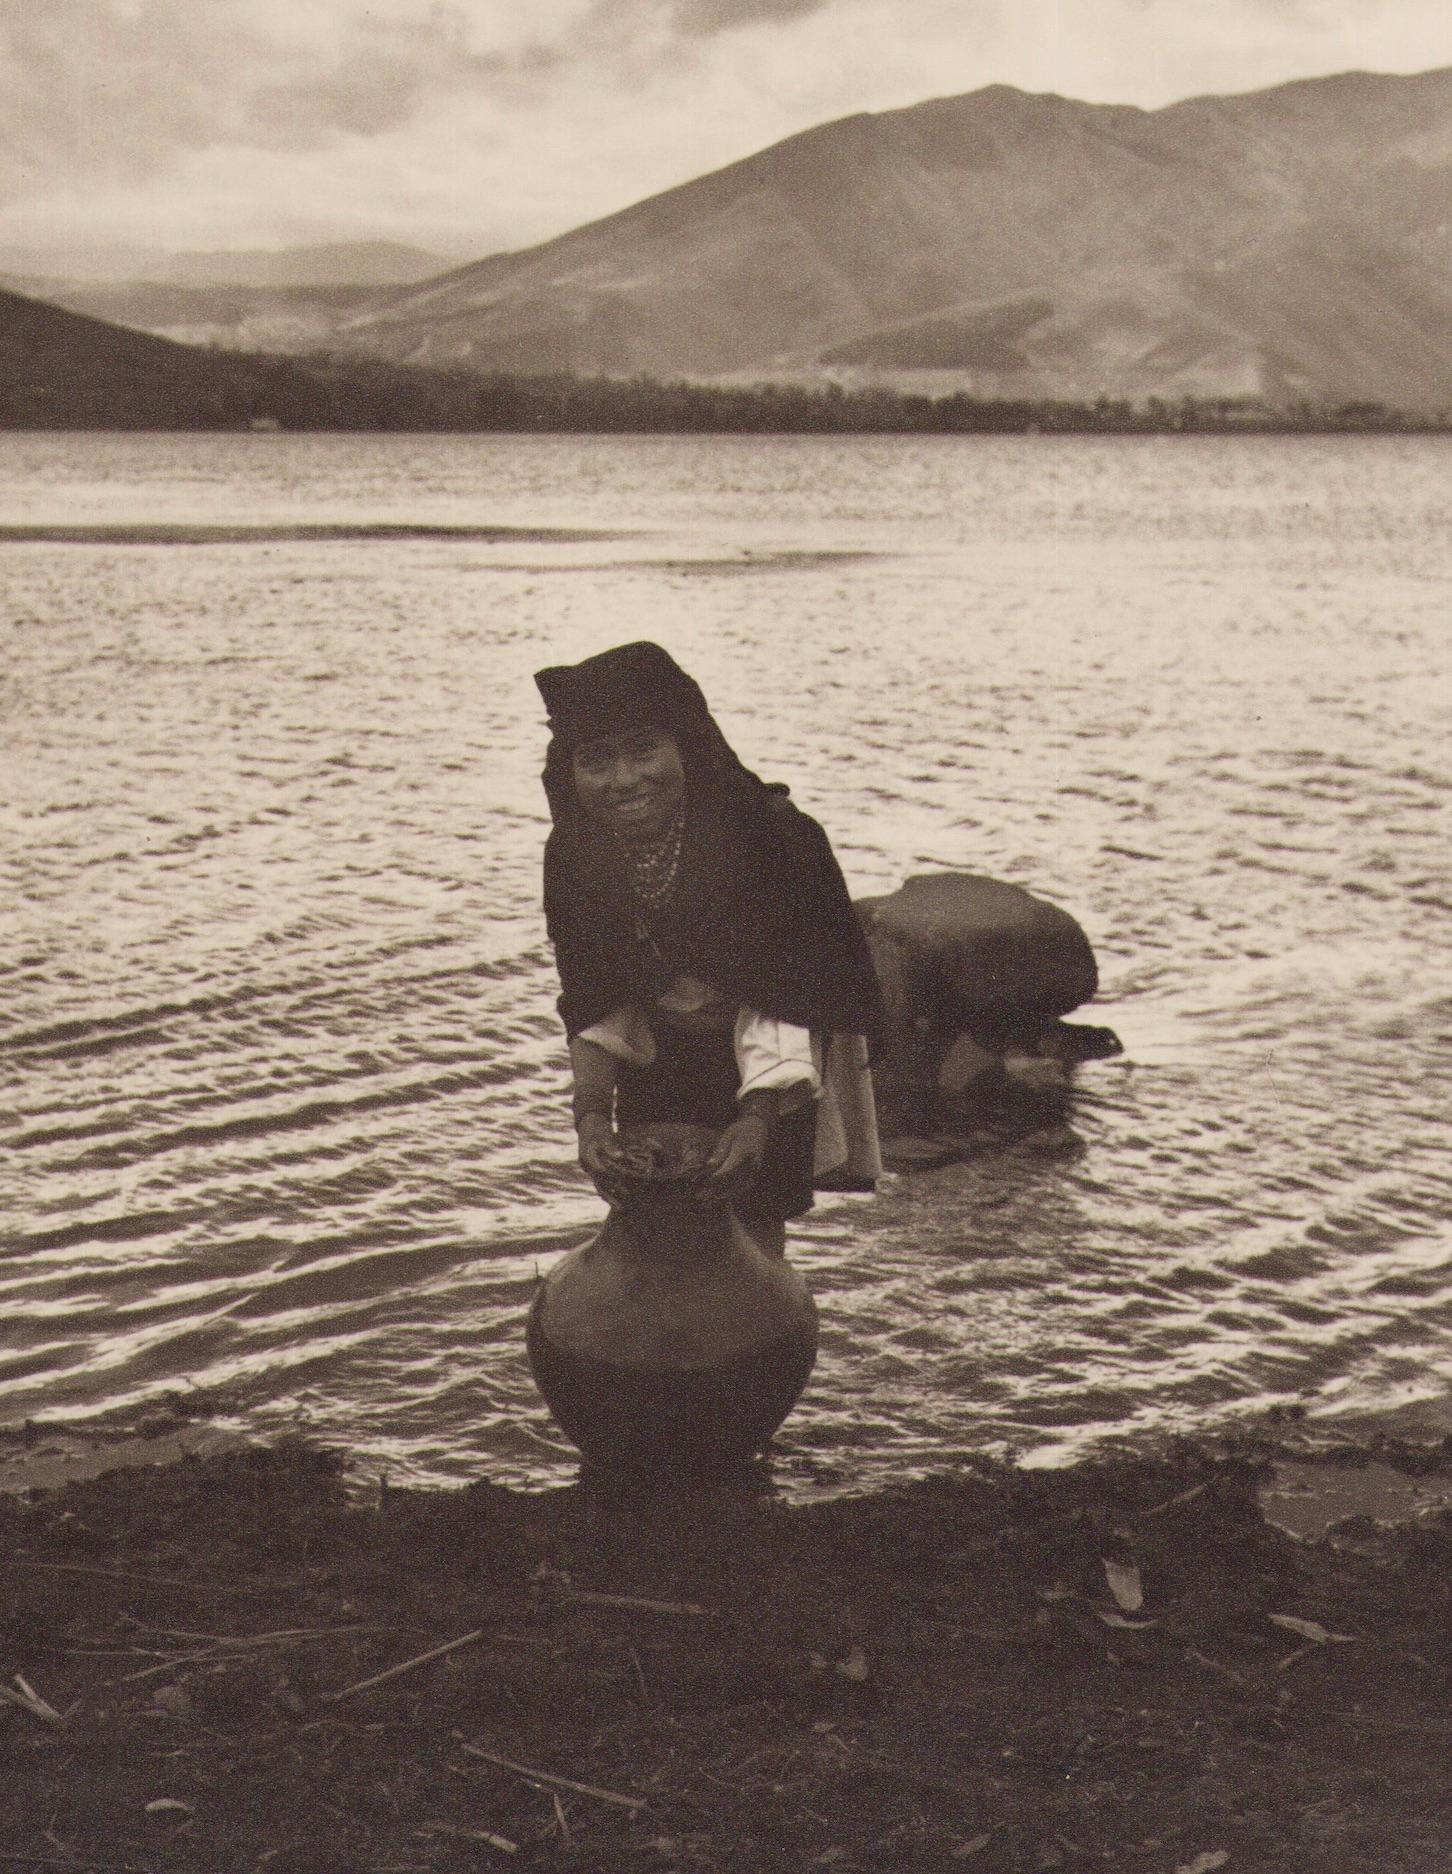 Ecuador, Lake, Woman, Black and White Photography, 1960s, 24, 2 x 25 cm - Brown Portrait Photograph by Hanna Seidel